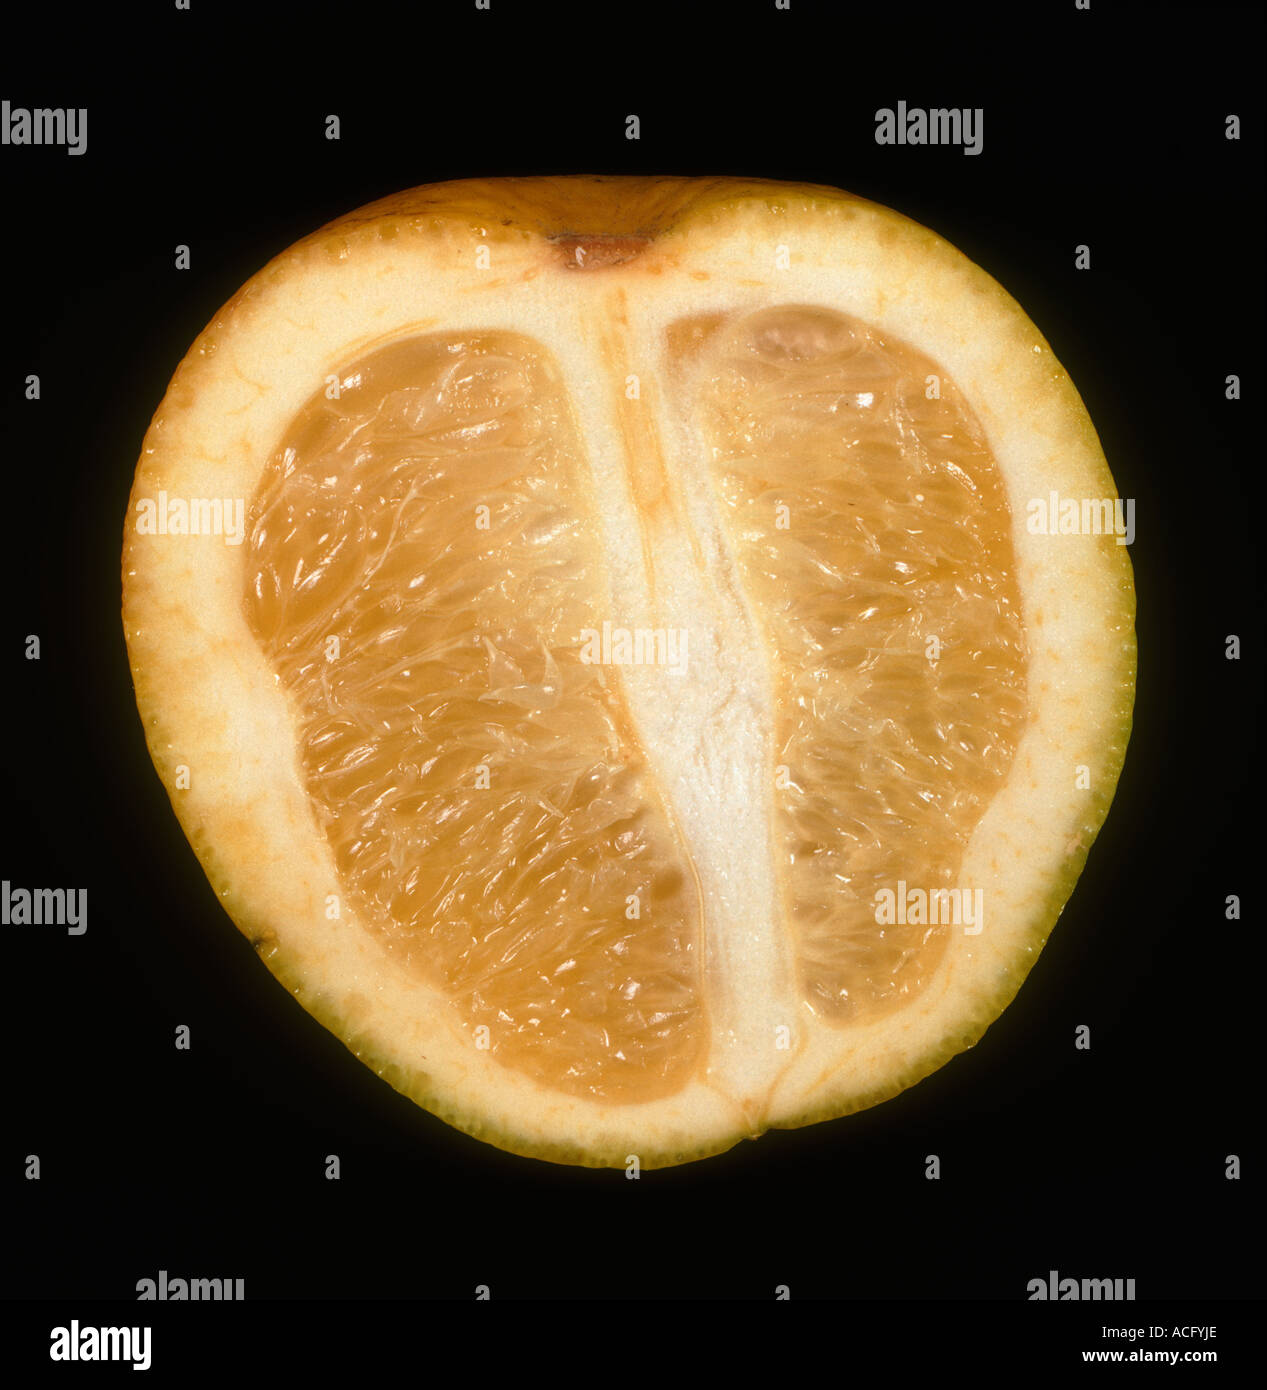 Citrus greening (Candidatus Liberibacter spp.) causing uneven development of an orange fruit Stock Photo